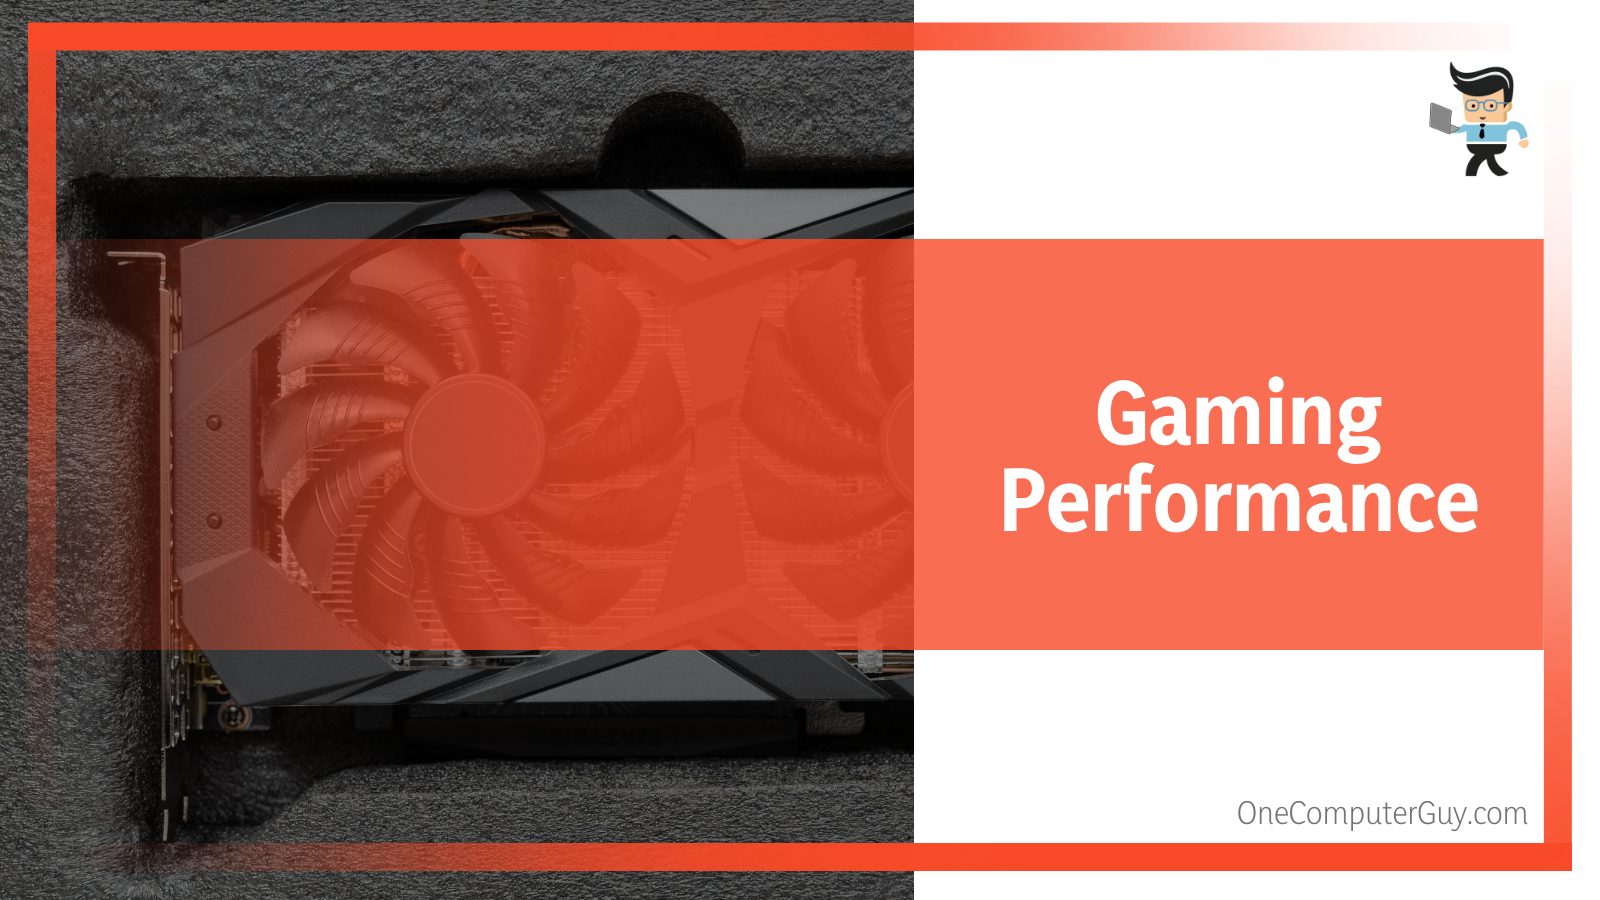 Gaming Performance 760 SLI vs 970